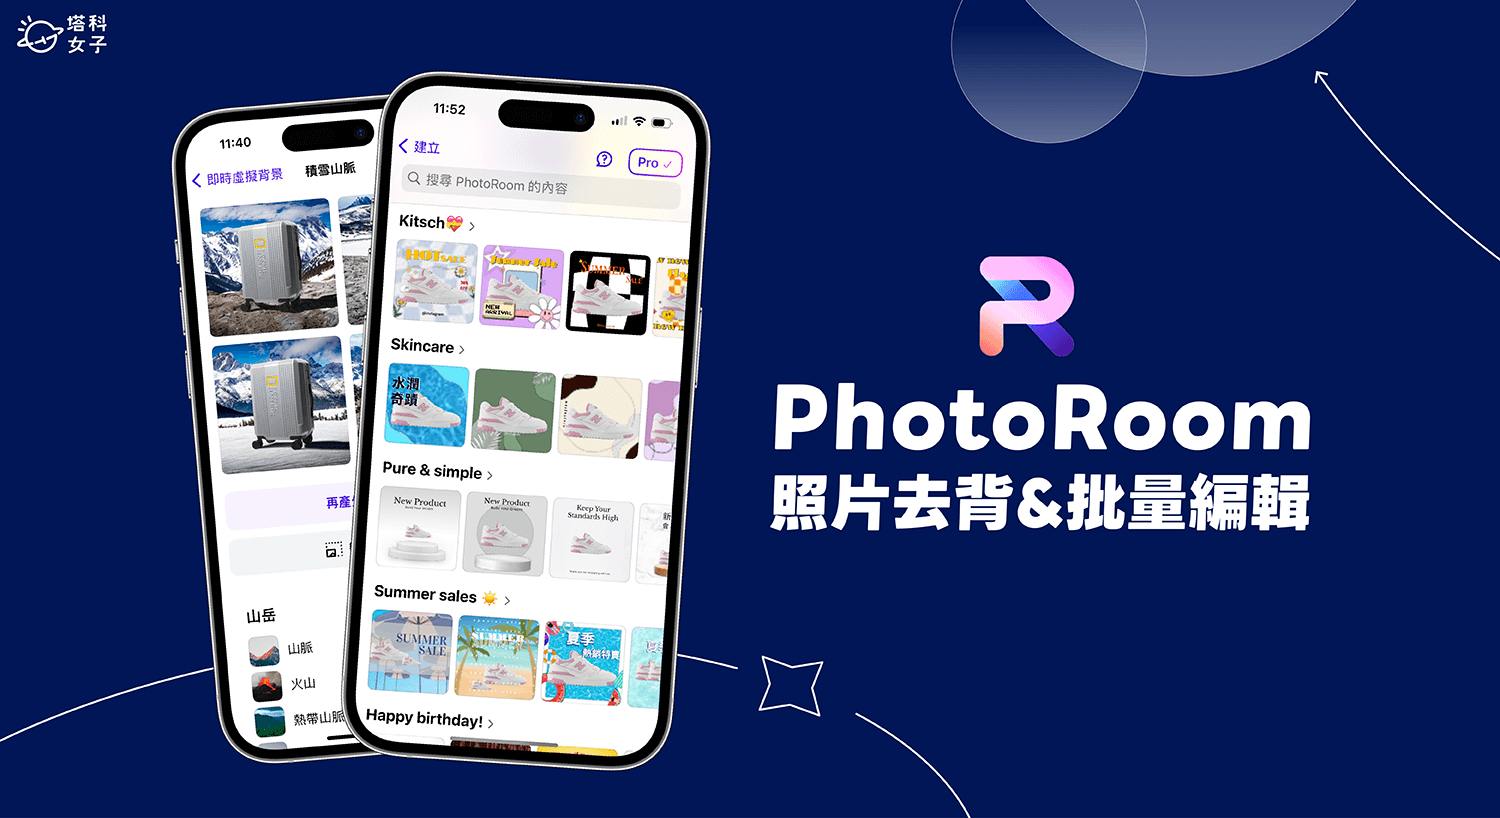 PhotoRoom APP 支援照片去背、照片去人物，提供上千款 AI 模板素材製作商品美圖！